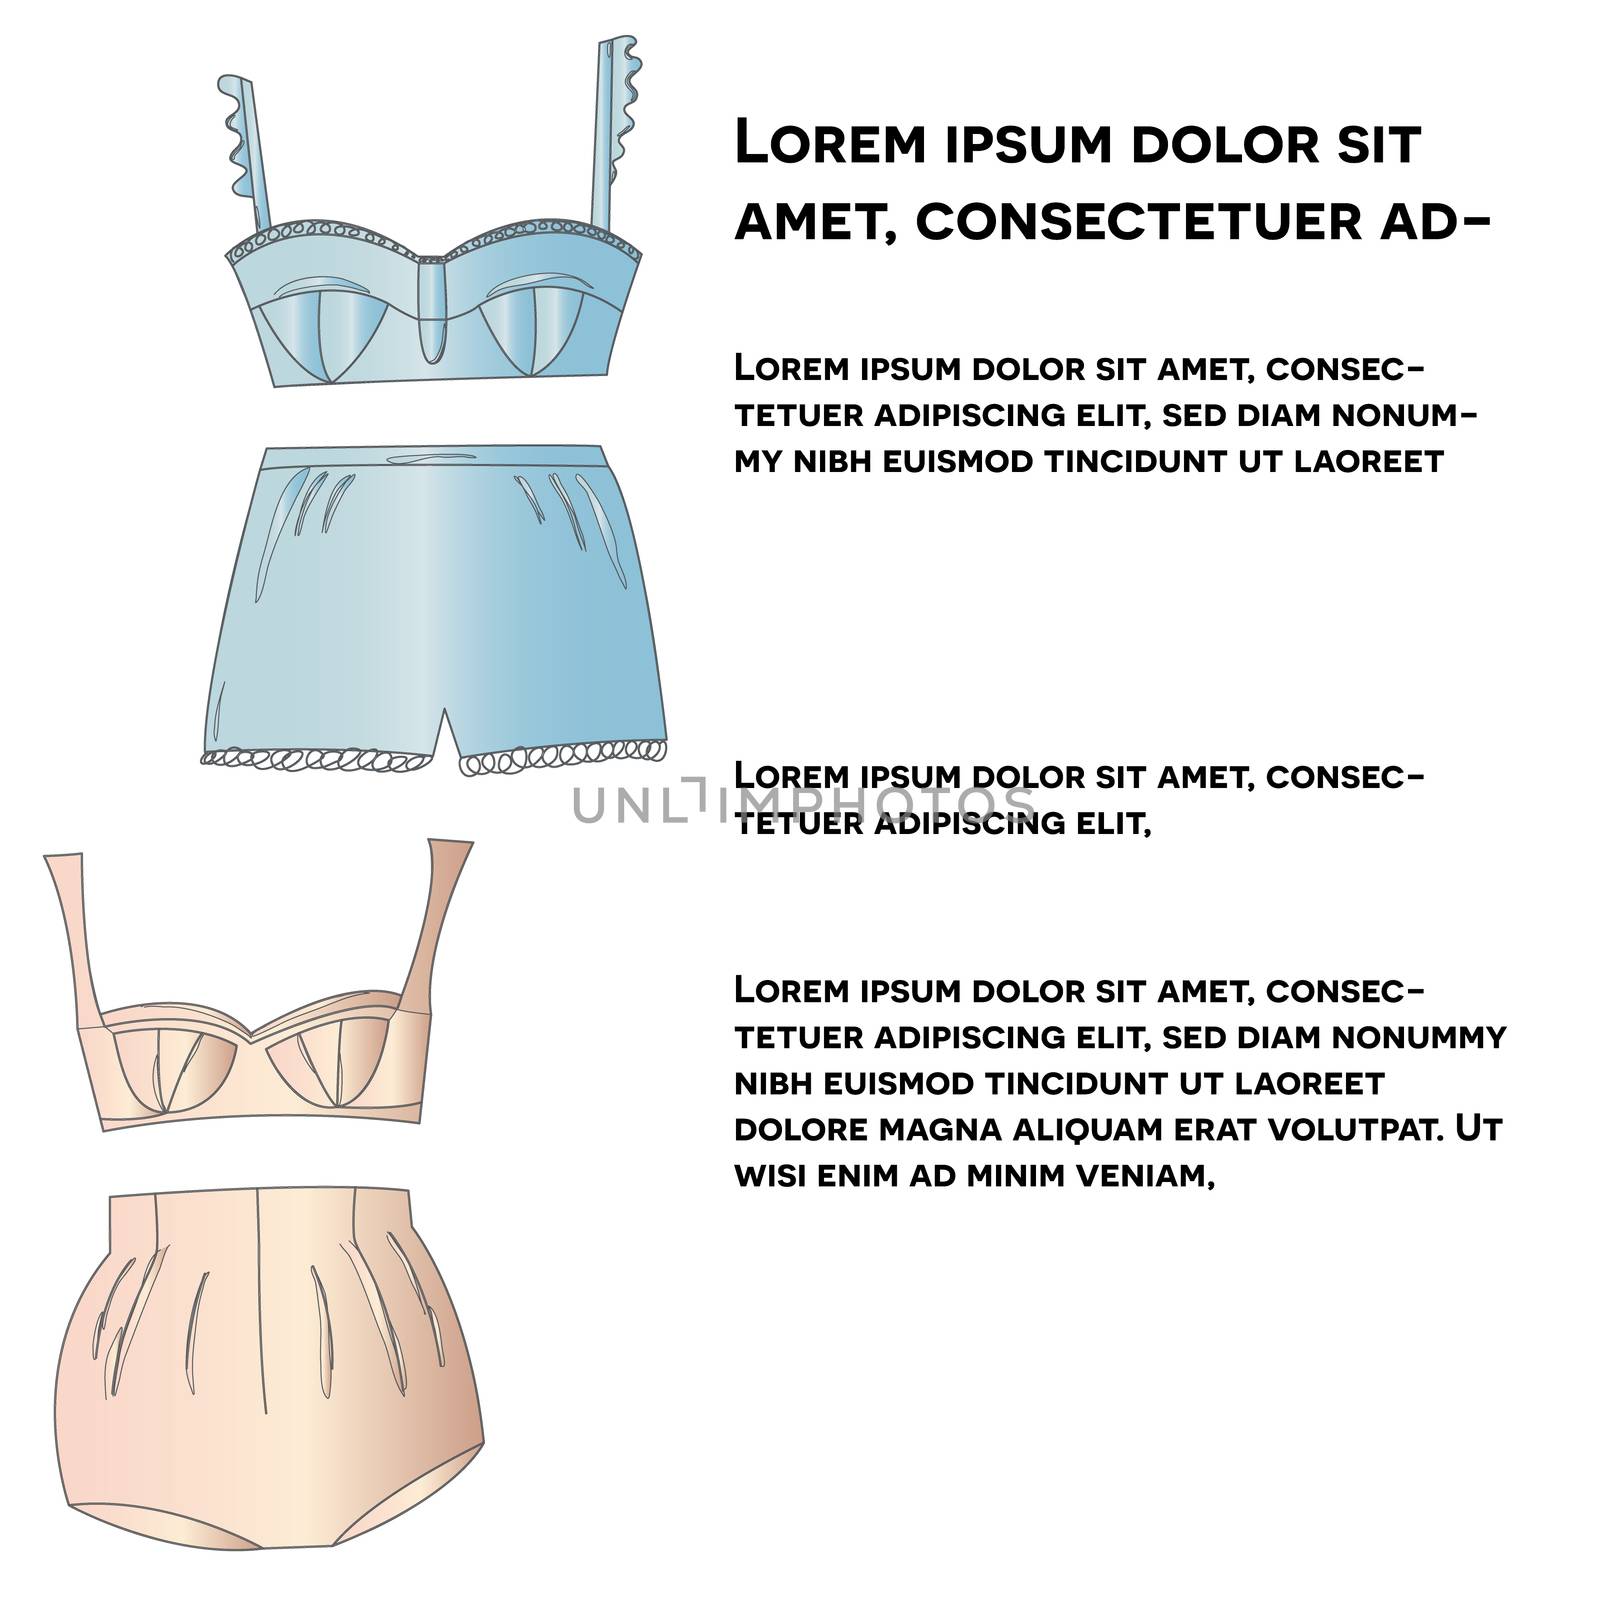 Feminine silk lingerie collection with text socila media post. by Nata_Prando